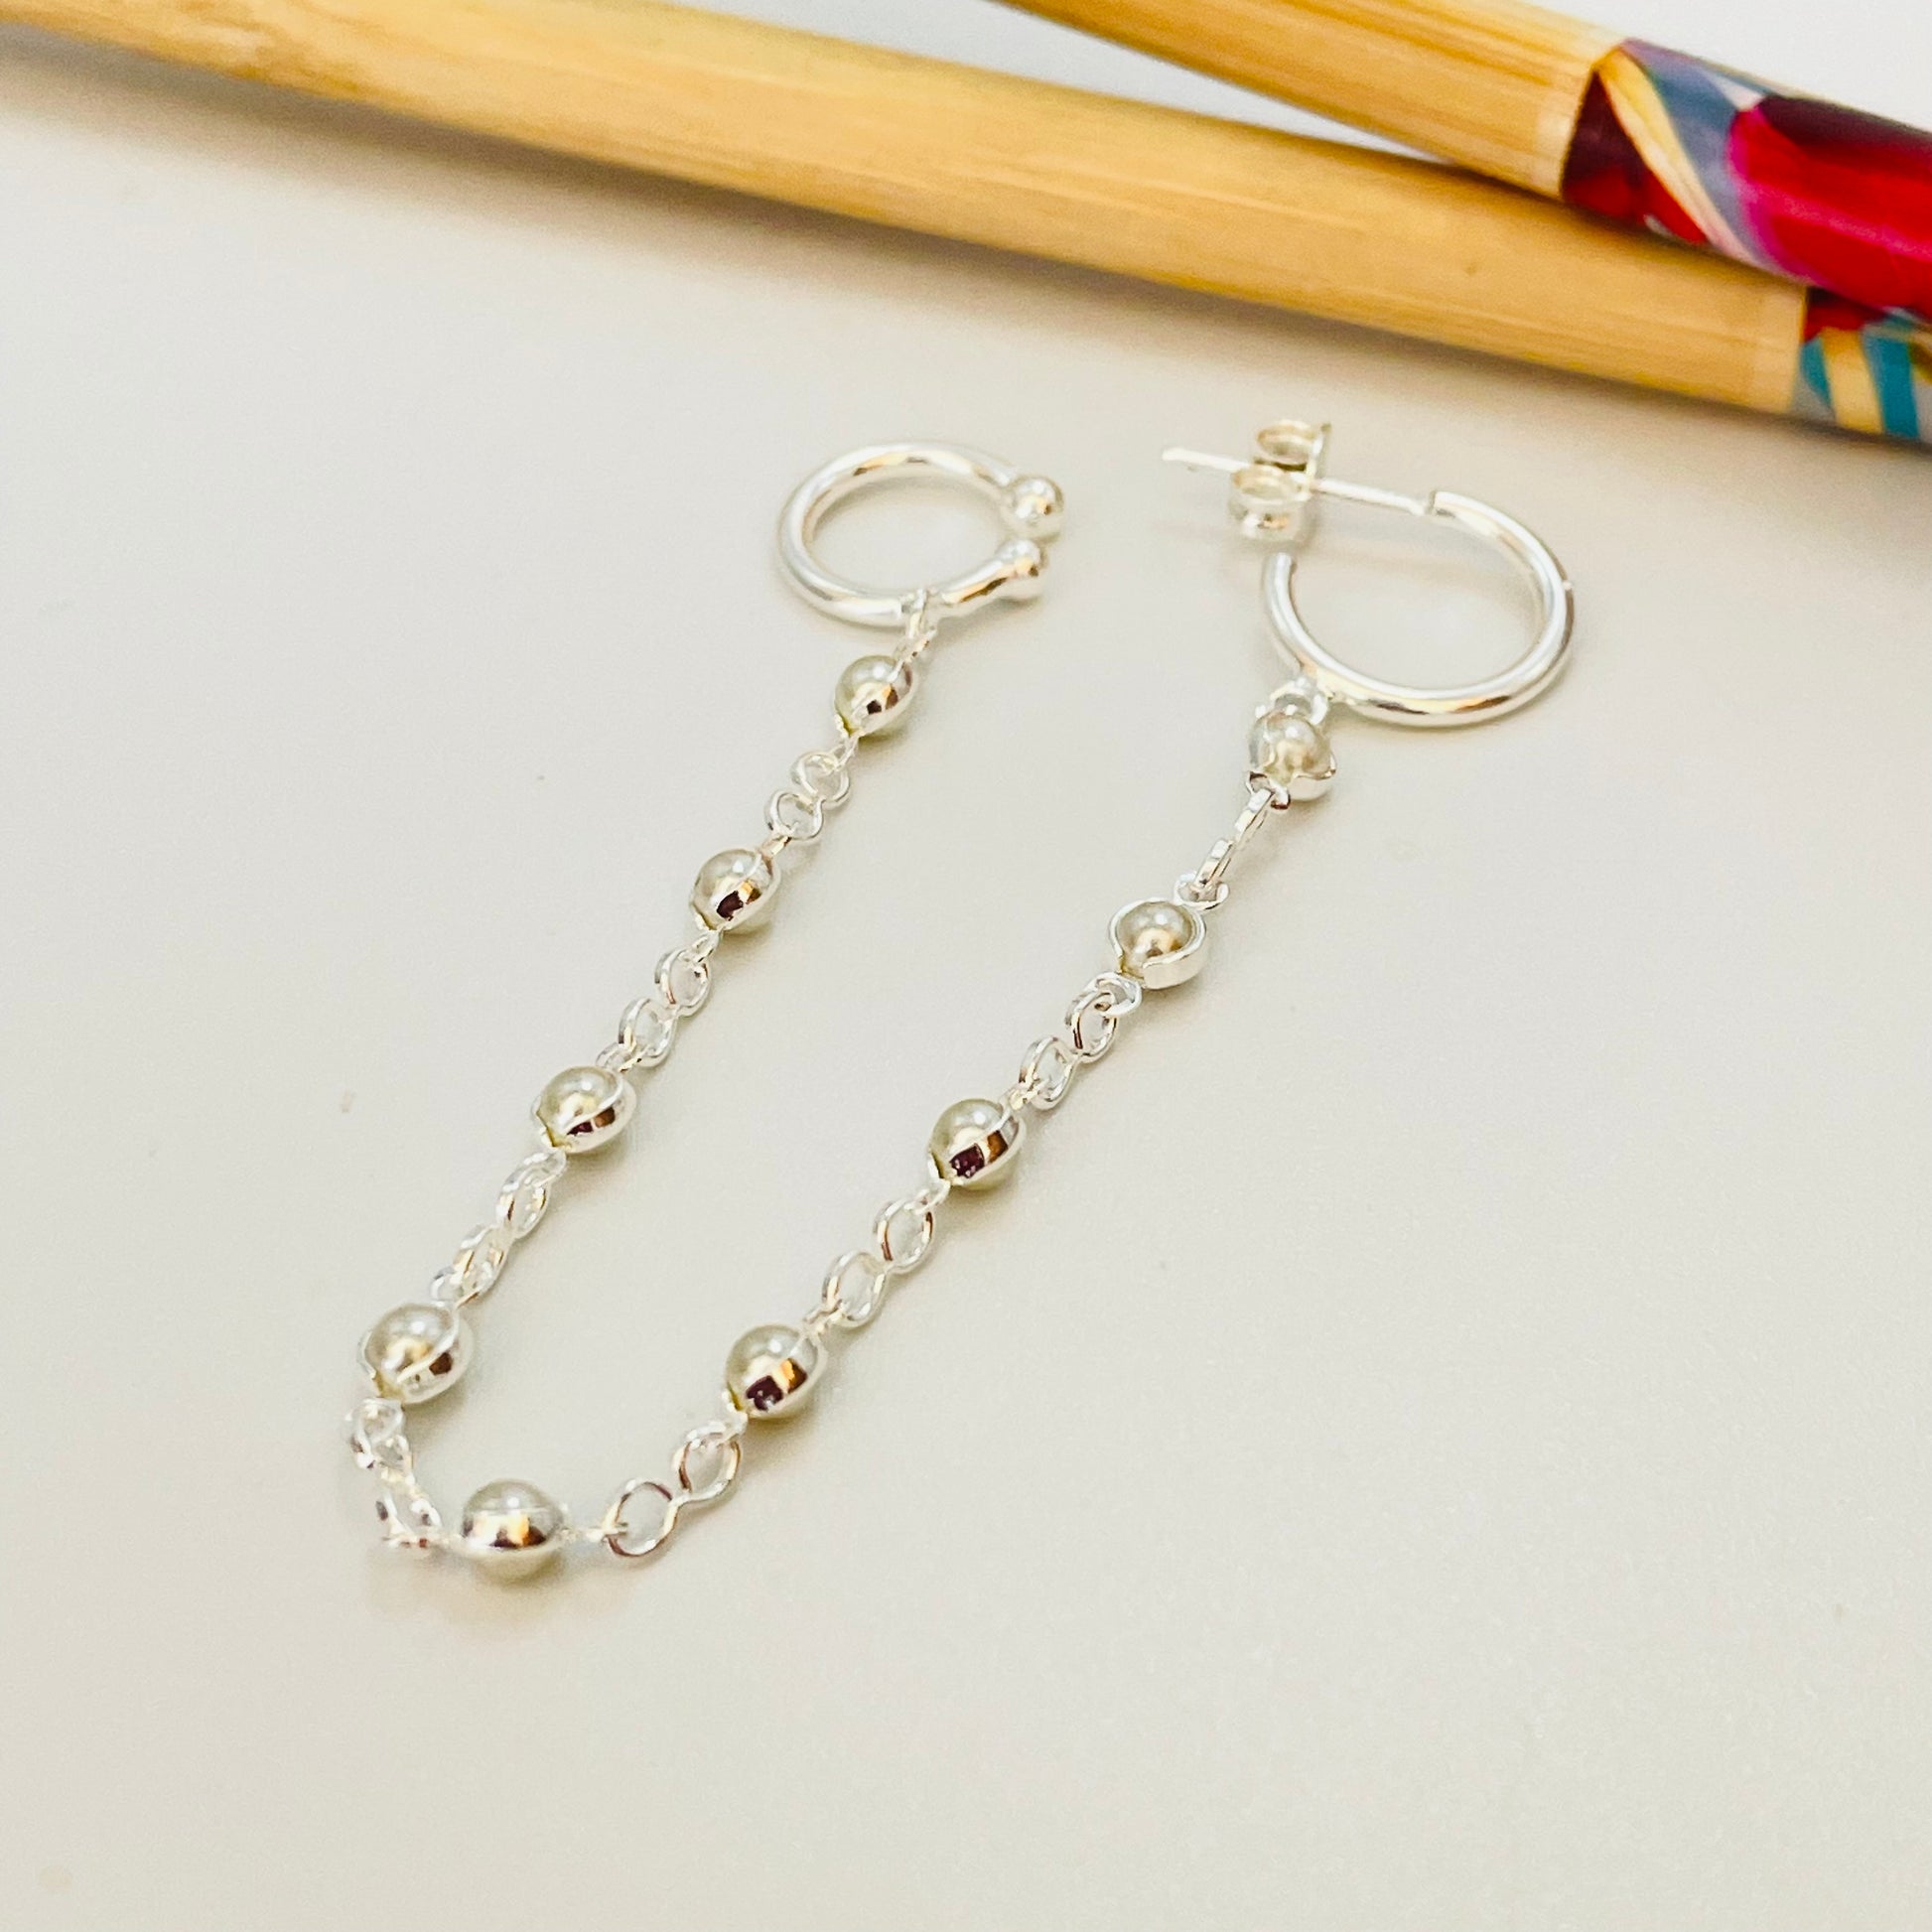 XP283 Aro argollita y cadena con perlas argolla 12 mm x 9 cm largo perla 2 mm Aro Baño Plata Aros Bañados hecho de Bronce Bañado en Plata 50 ml Joyas Bañadas en Plata